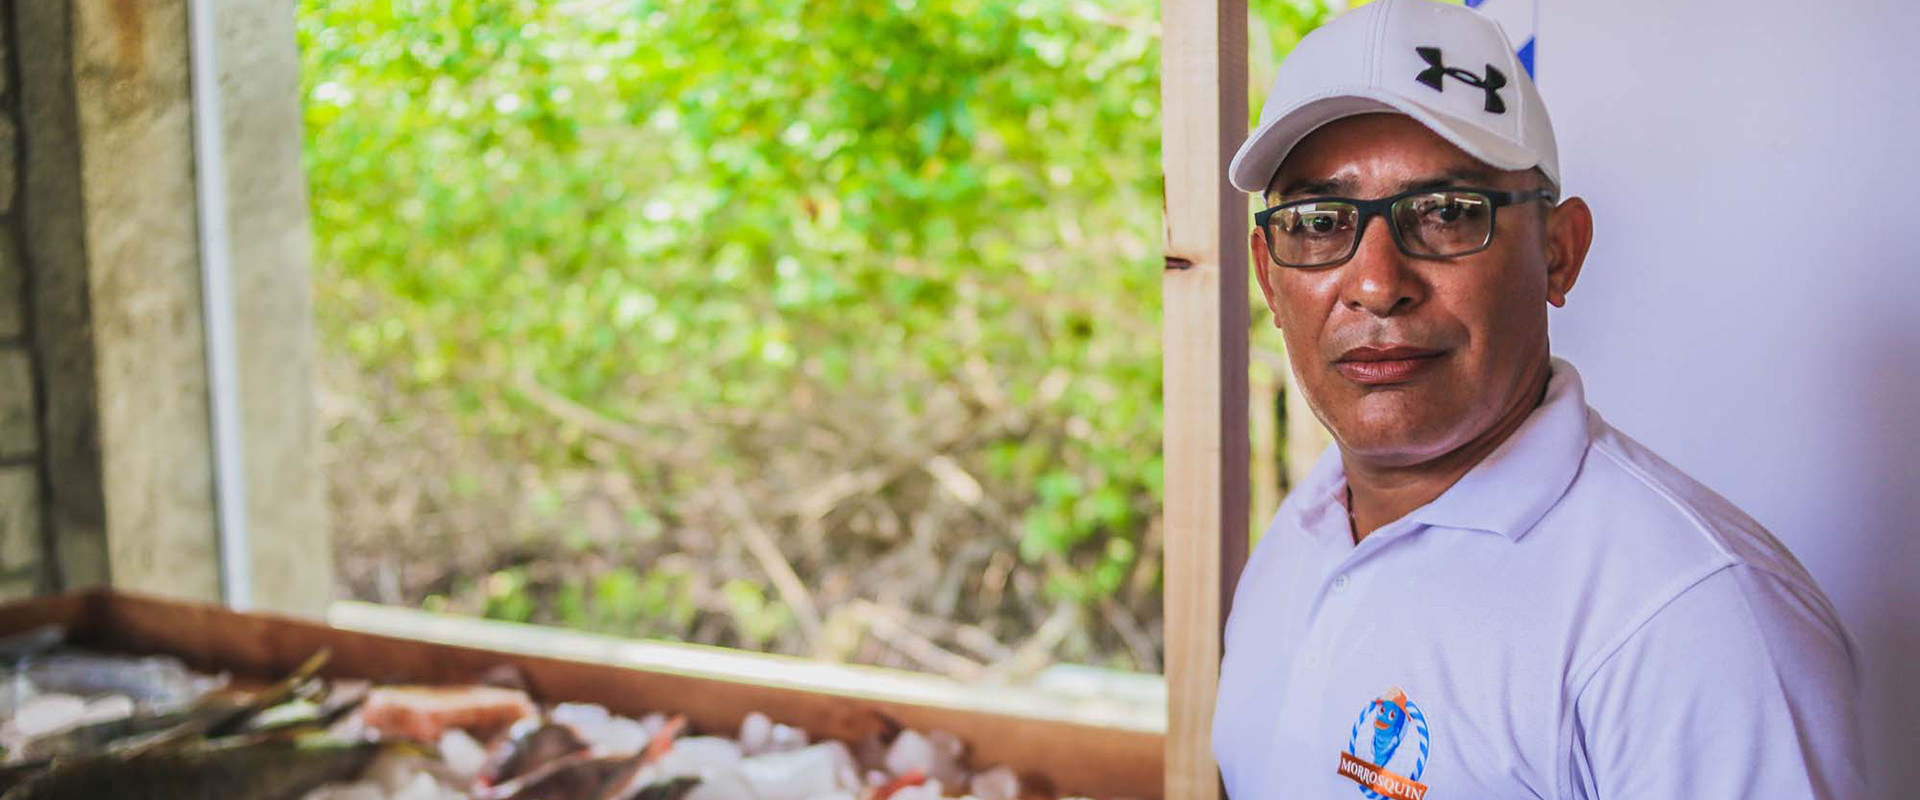 Morrosquín: Sí a la pesca artesanal responsable